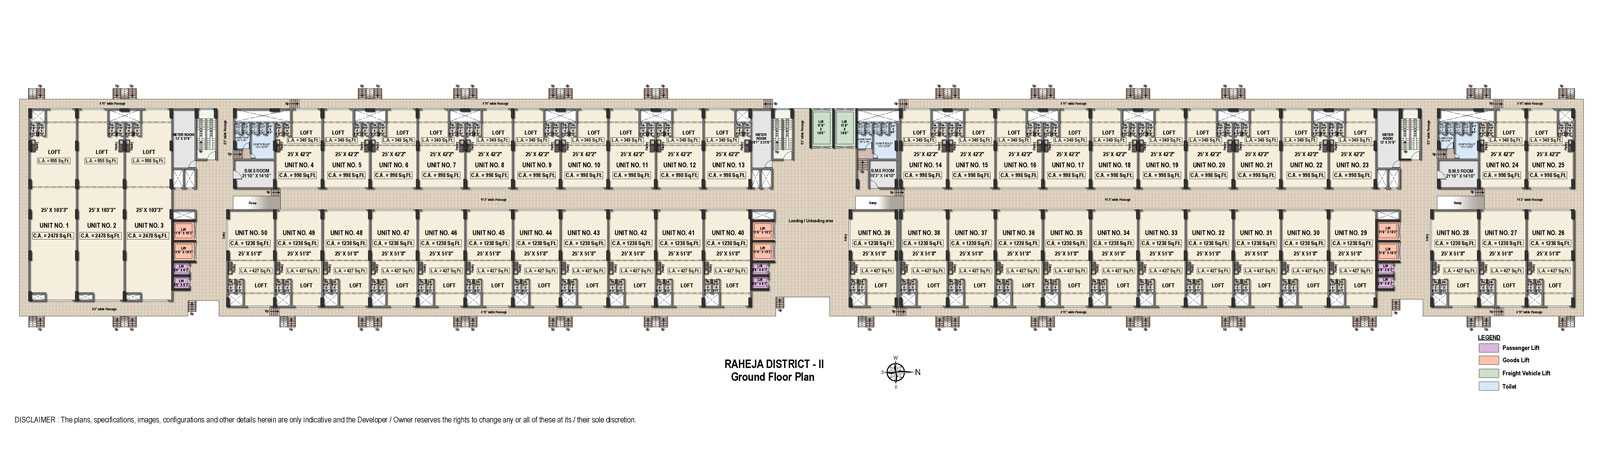 Raheja District II Floor Plan